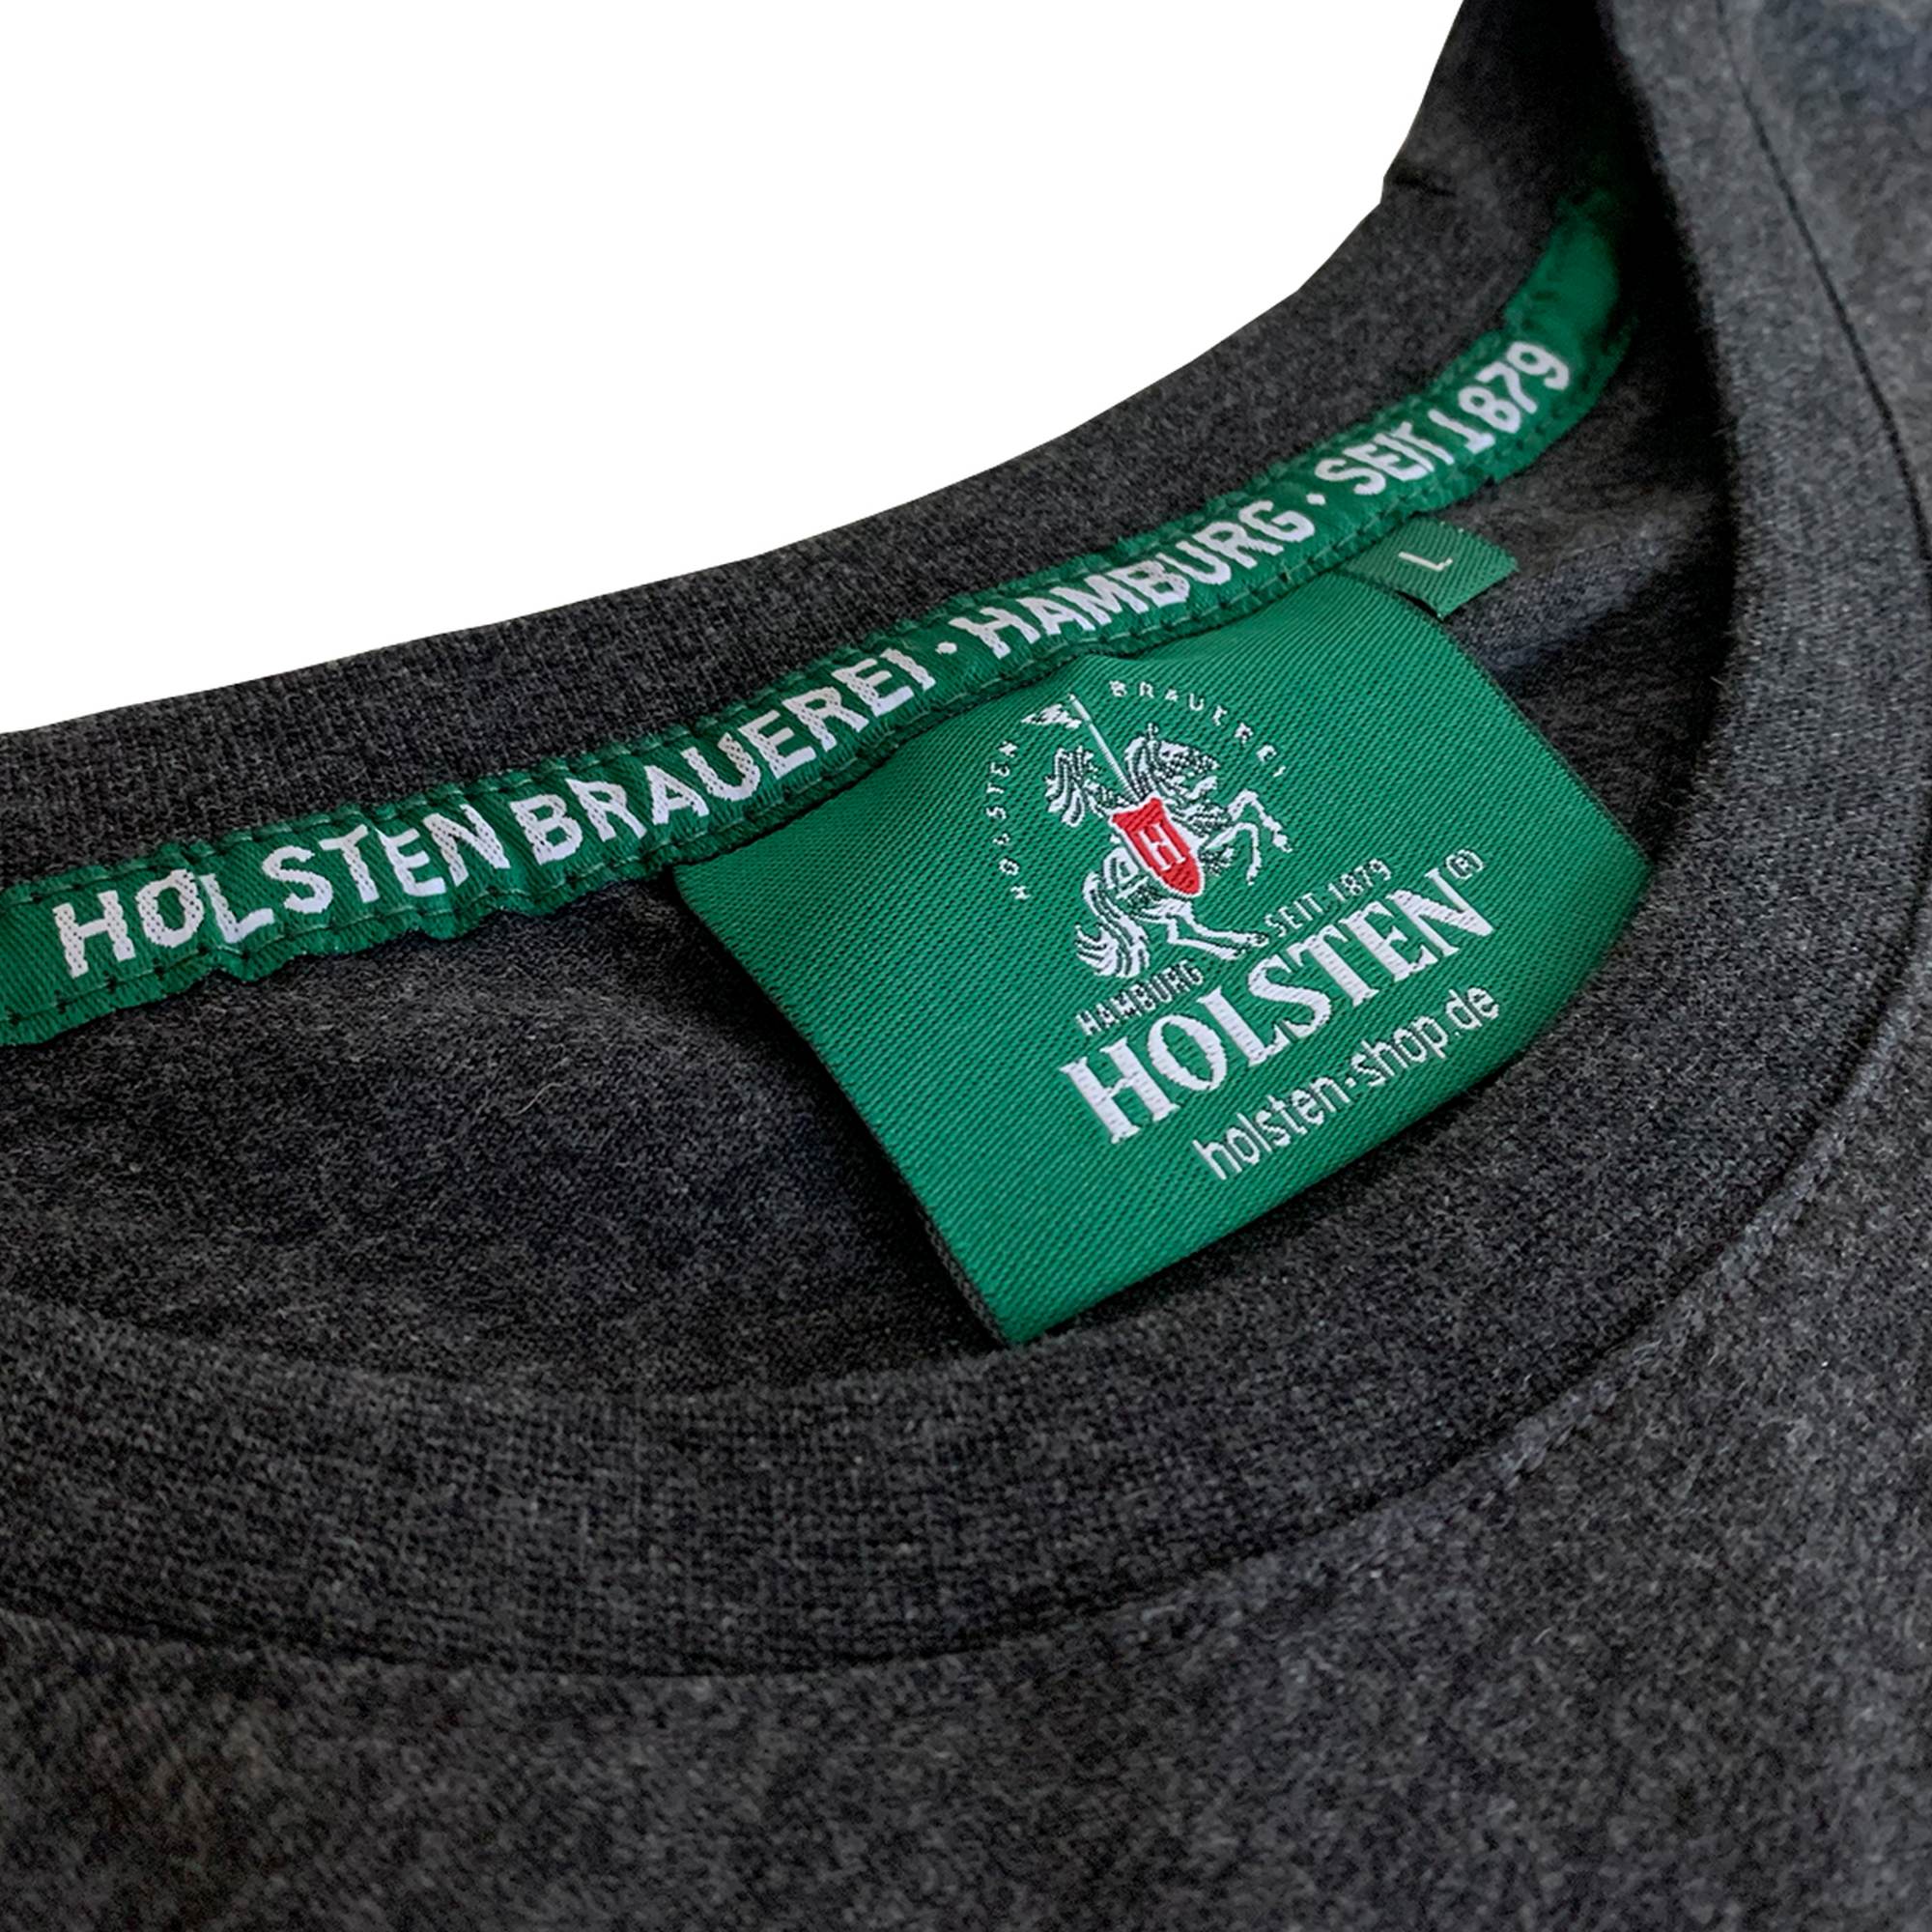 Holsten - T-Shirt Ritter groß - anthrazit